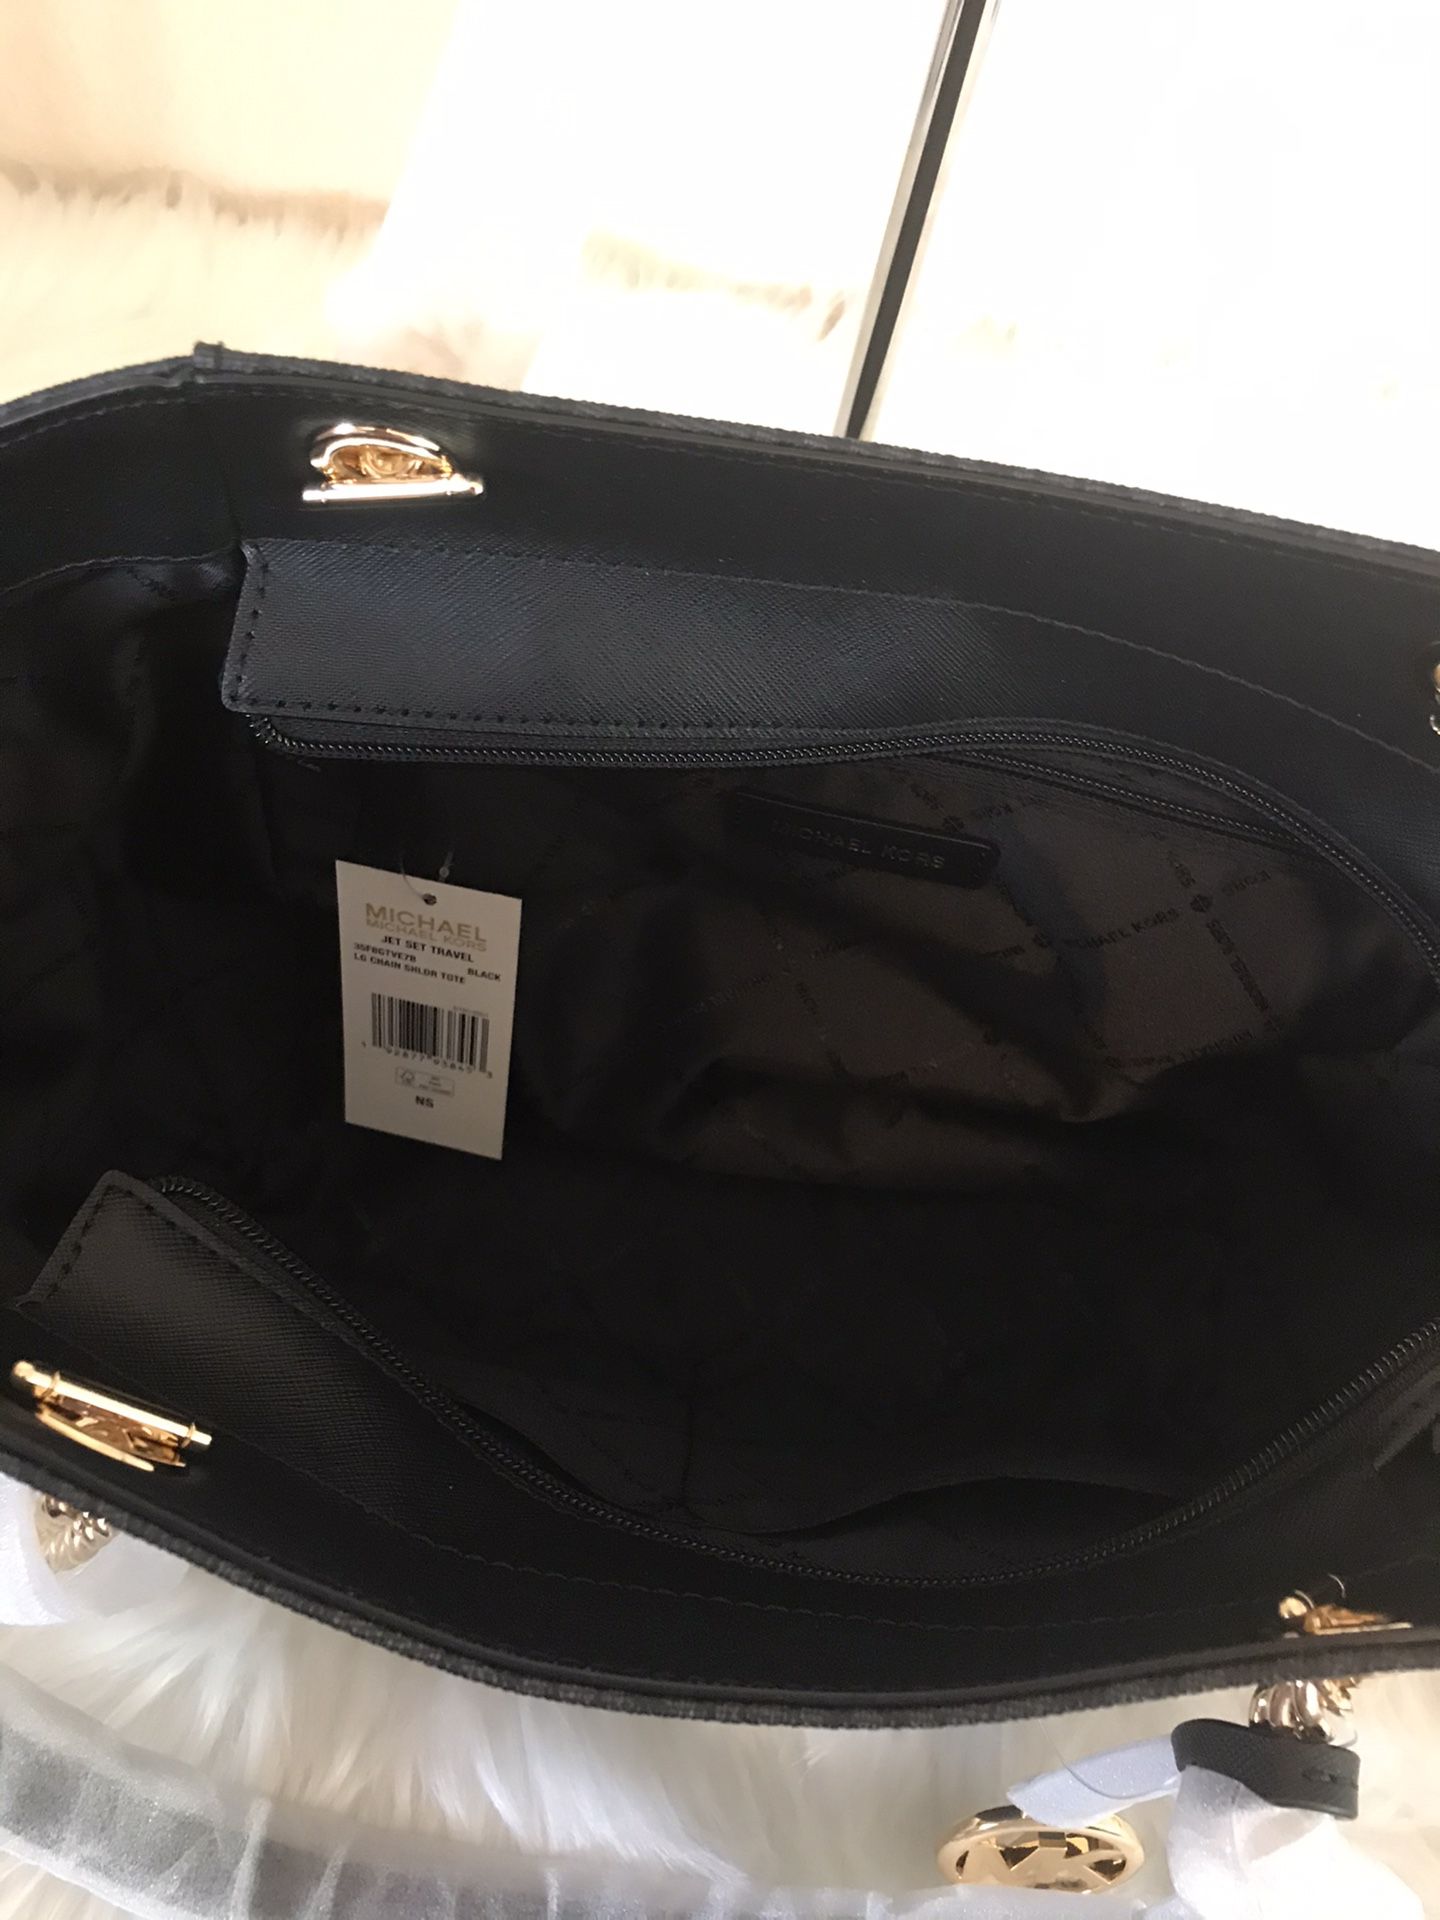 MICHAEL KORS Jet Set Medium Saffiano Leather Top-Zip Tote Bag for Sale in  Honolulu, HI - OfferUp